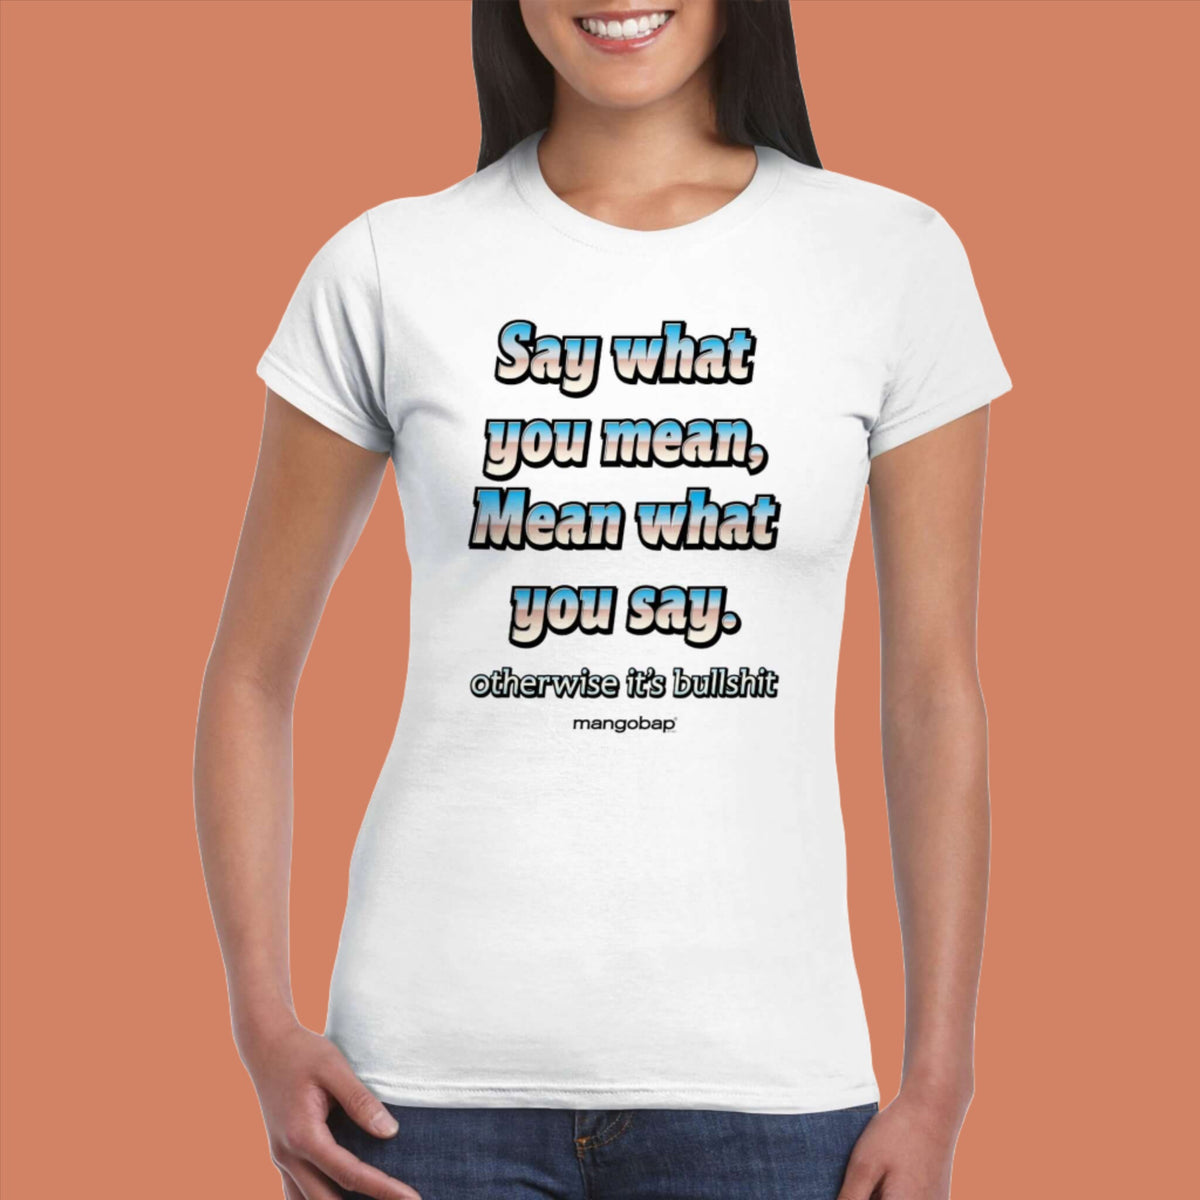 Womens Say What You Mean white t shirt - MangoBap